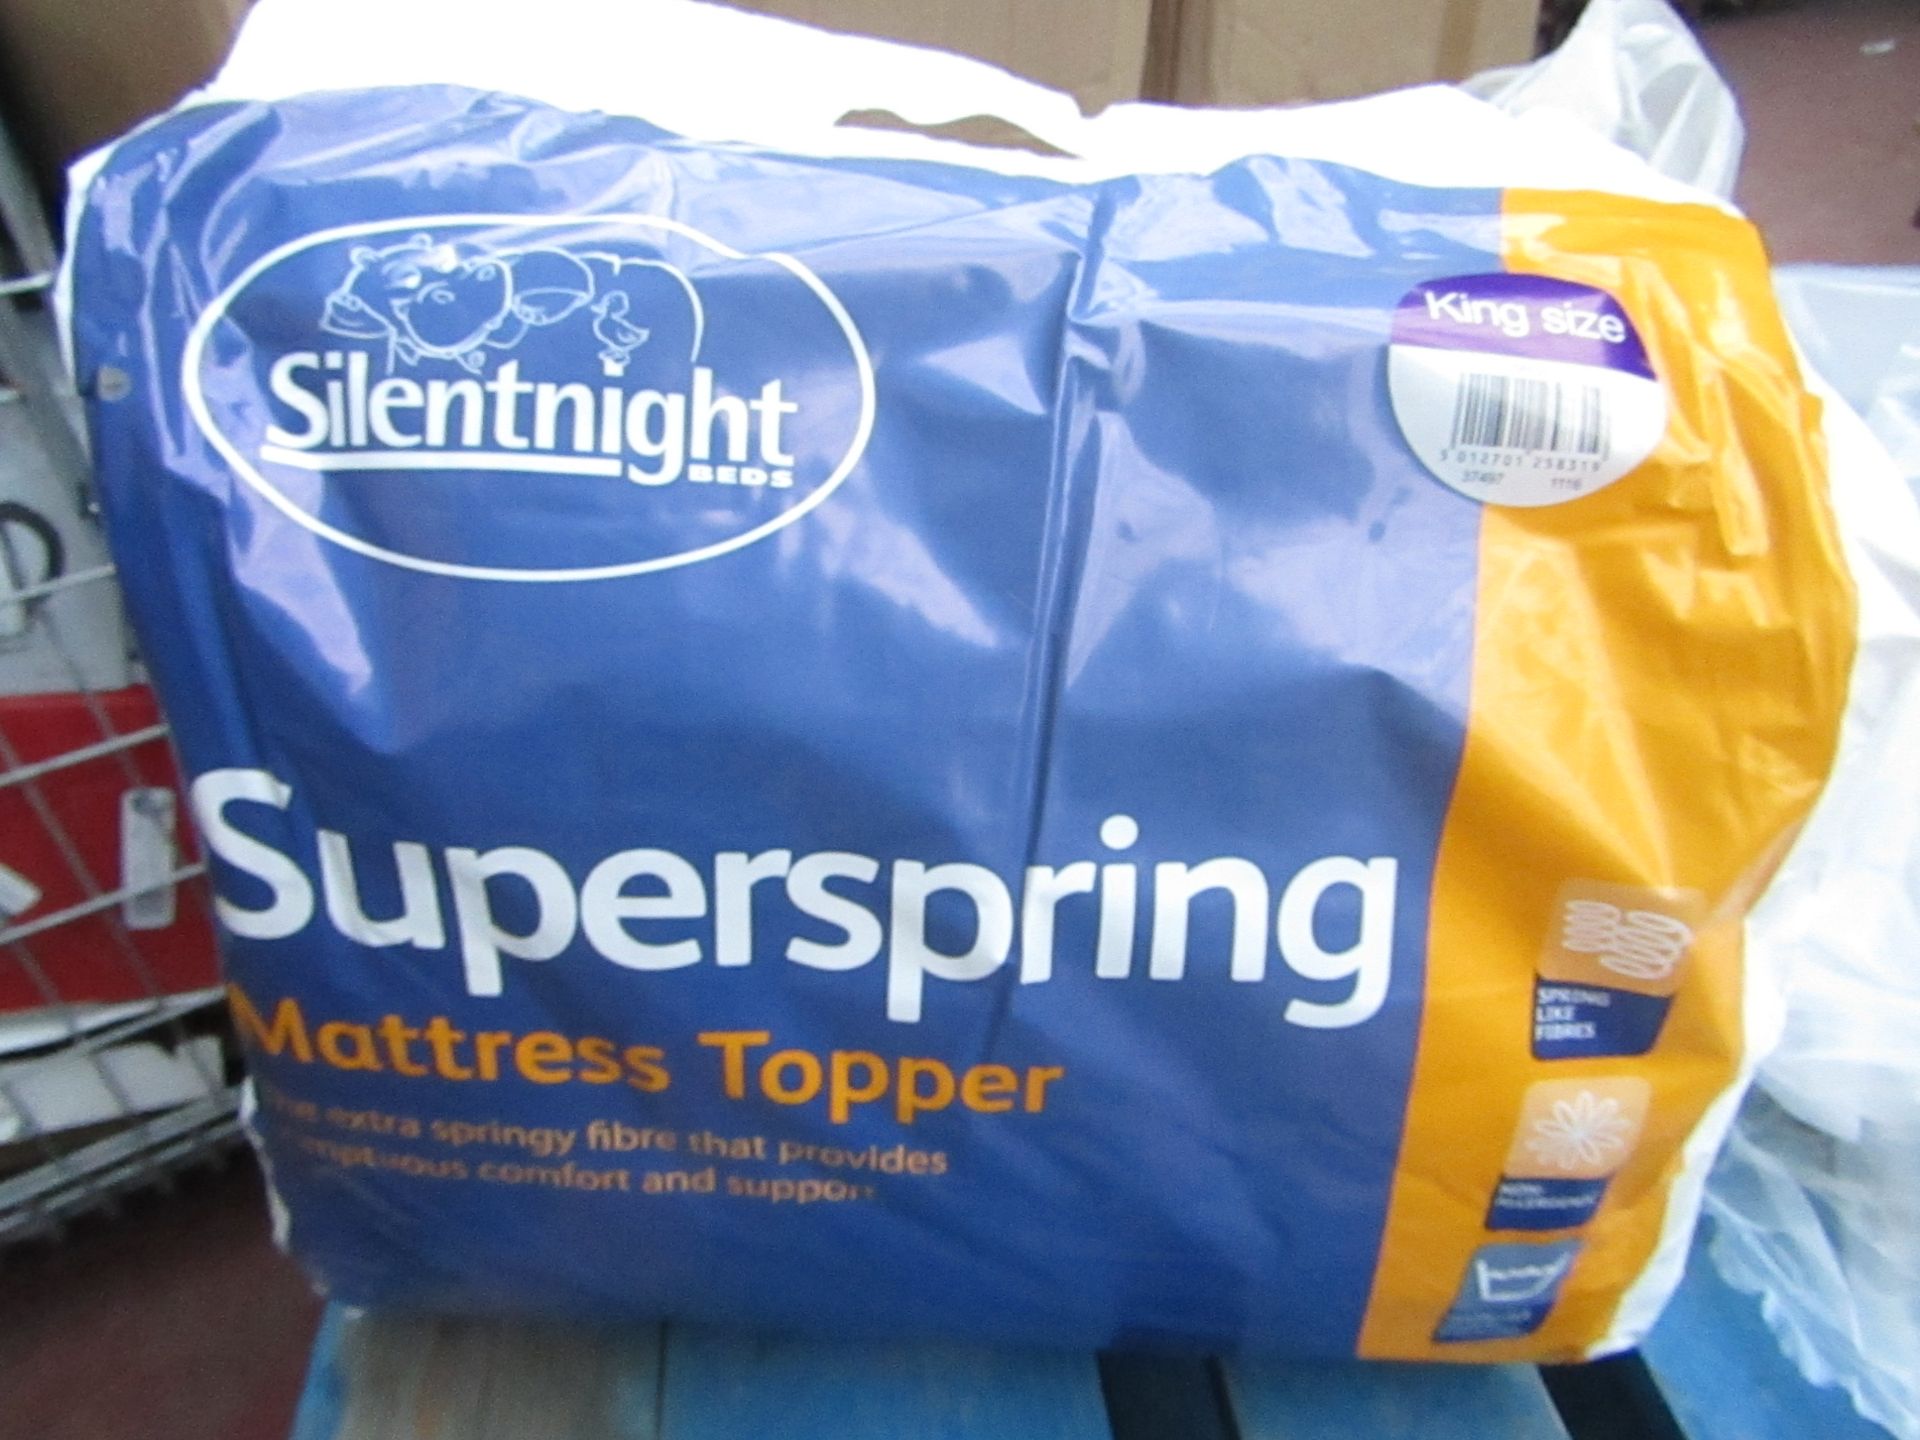 24x Silentnight Super Spring mattress topper, kingsize, all brand new and packaged. Each RRP £29.99